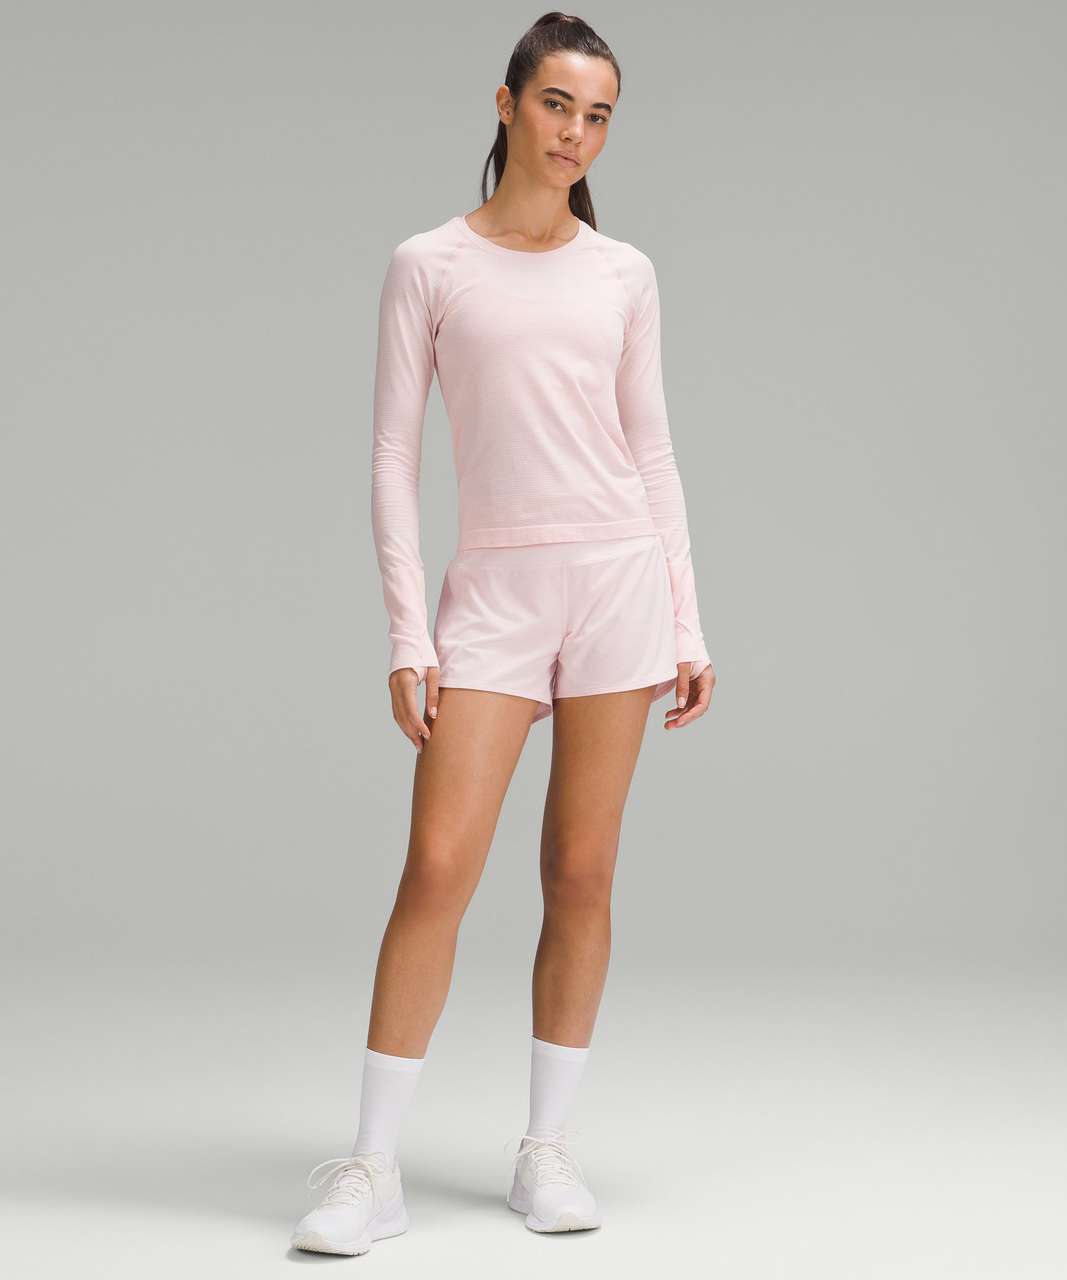 Lululemon Swiftly Tech Long-Sleeve Shirt 2.0 *Race Length - Flush Pink / Flush Pink